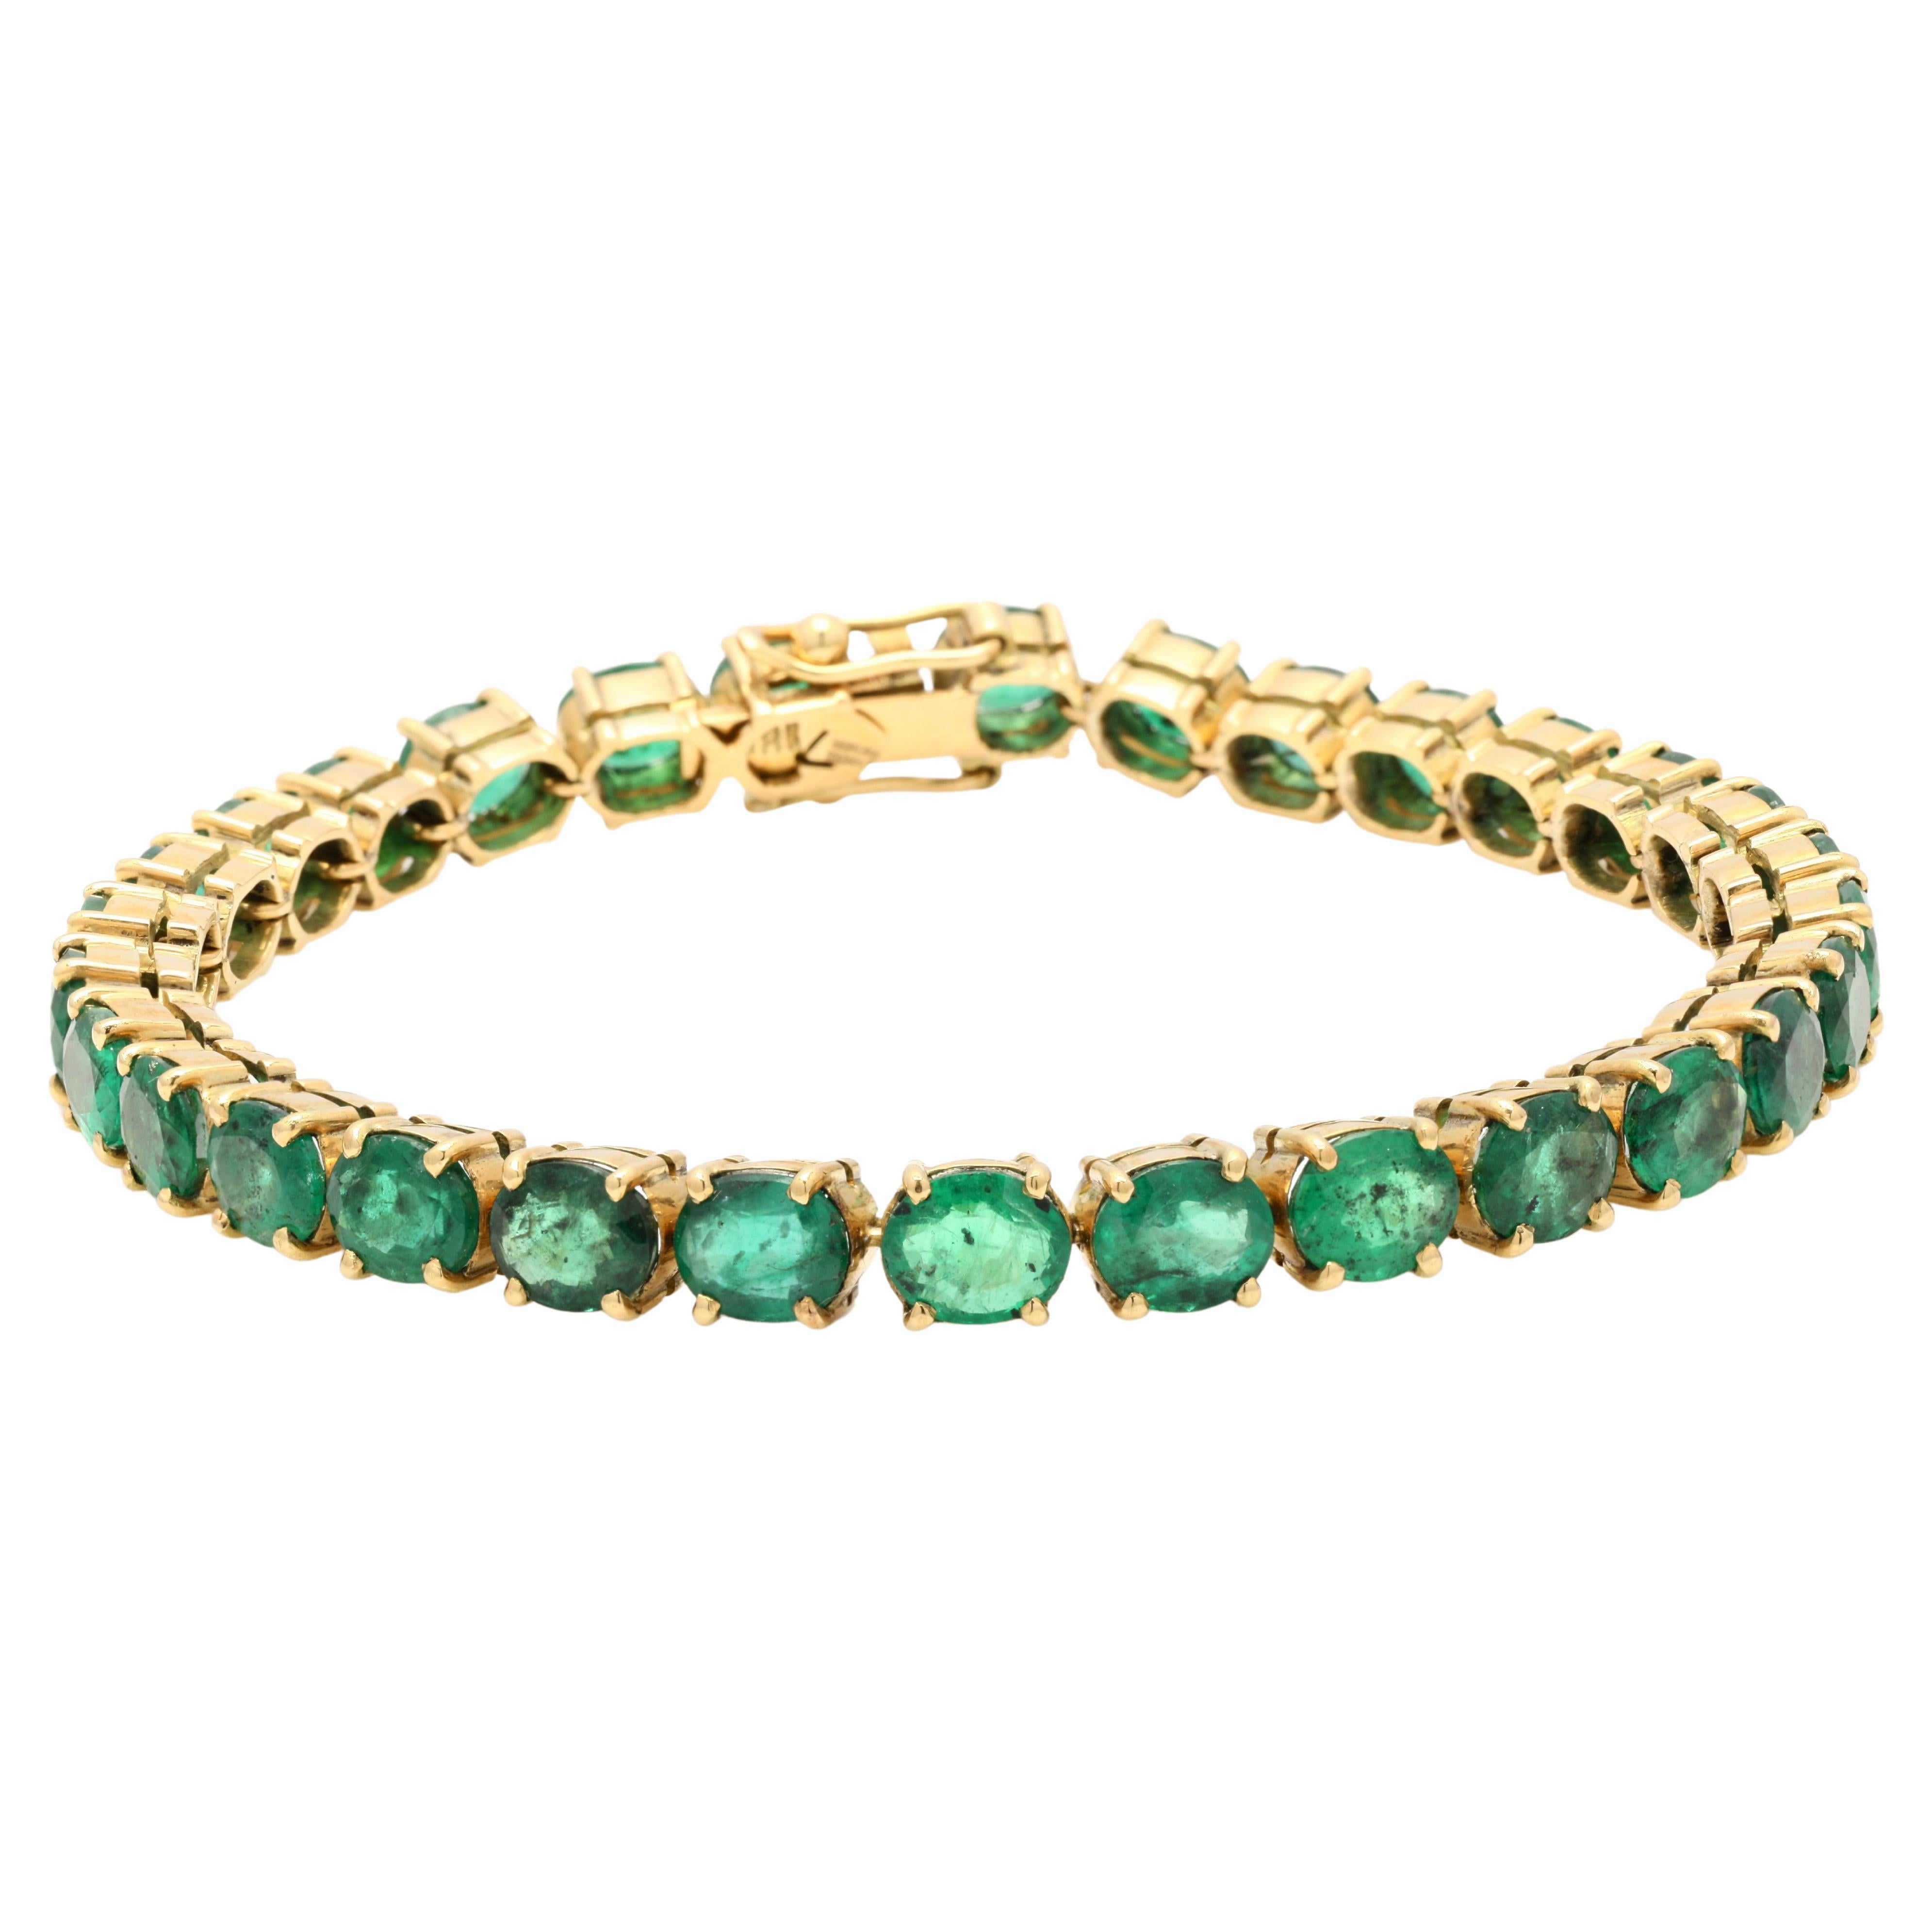 Bracelet en or jaune 14 carats avec incrustations d'émeraudes vertes ovales de 24,5 carats